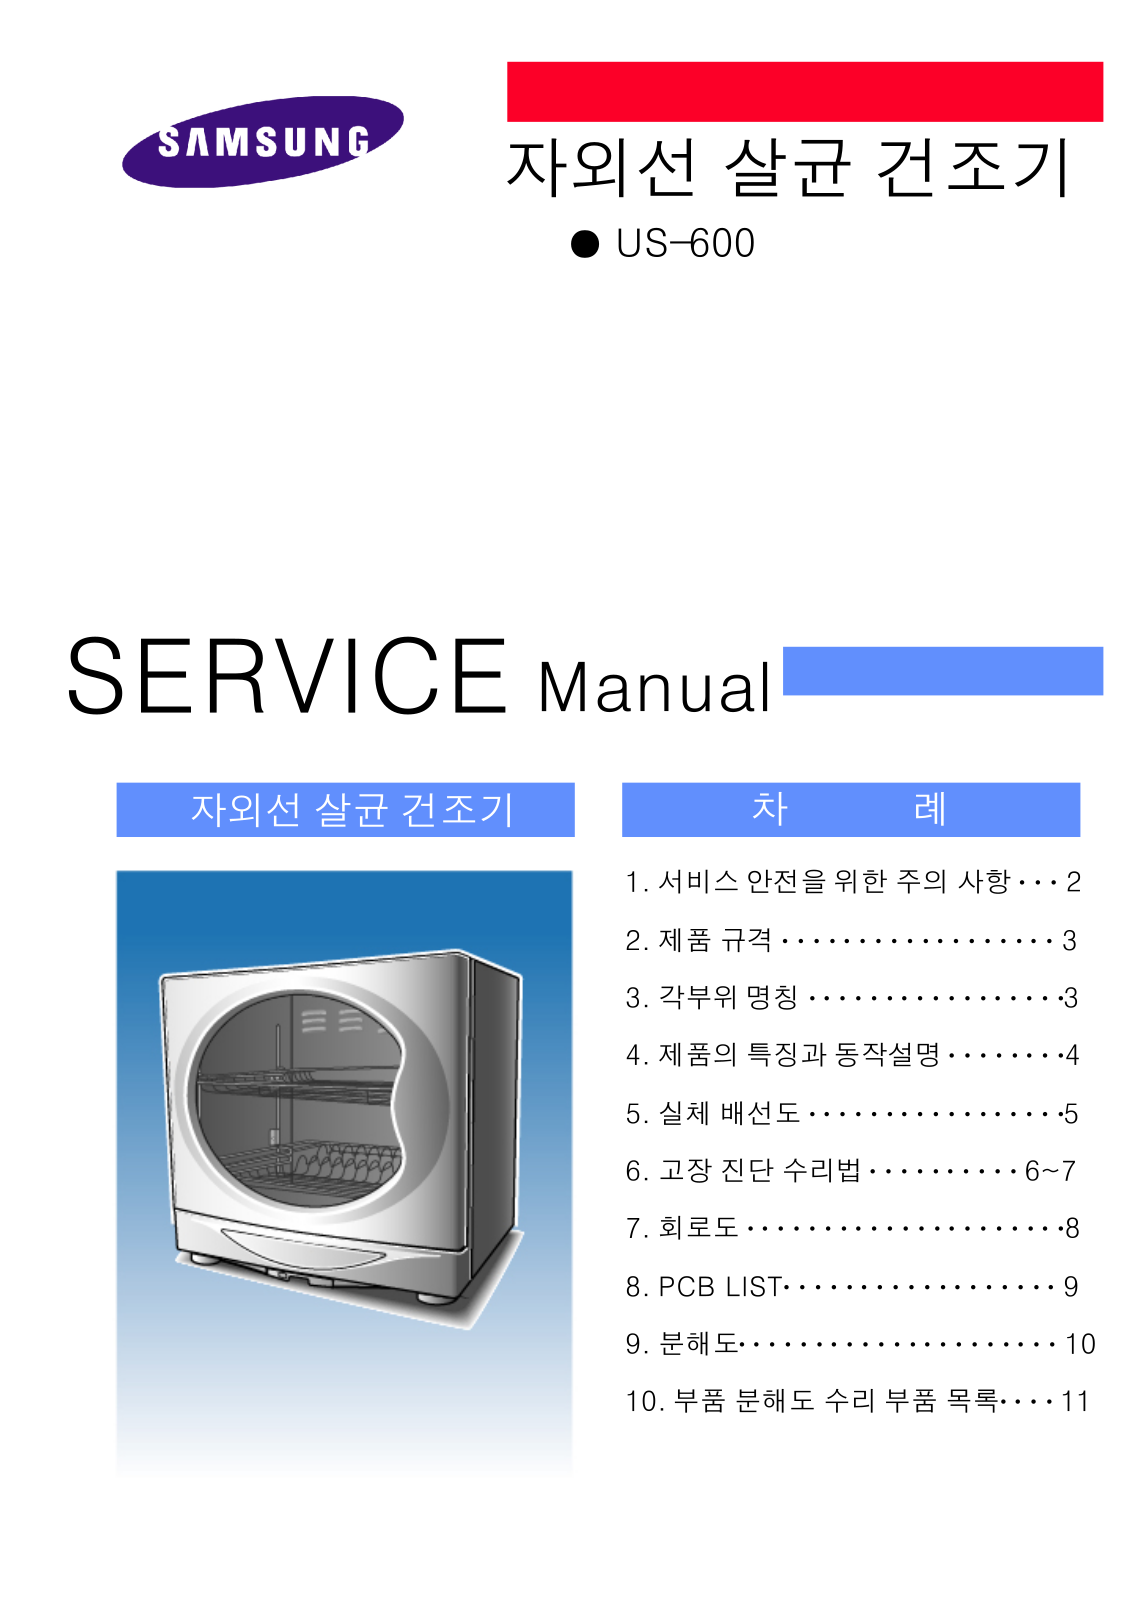 Samsung US-600 User Manual